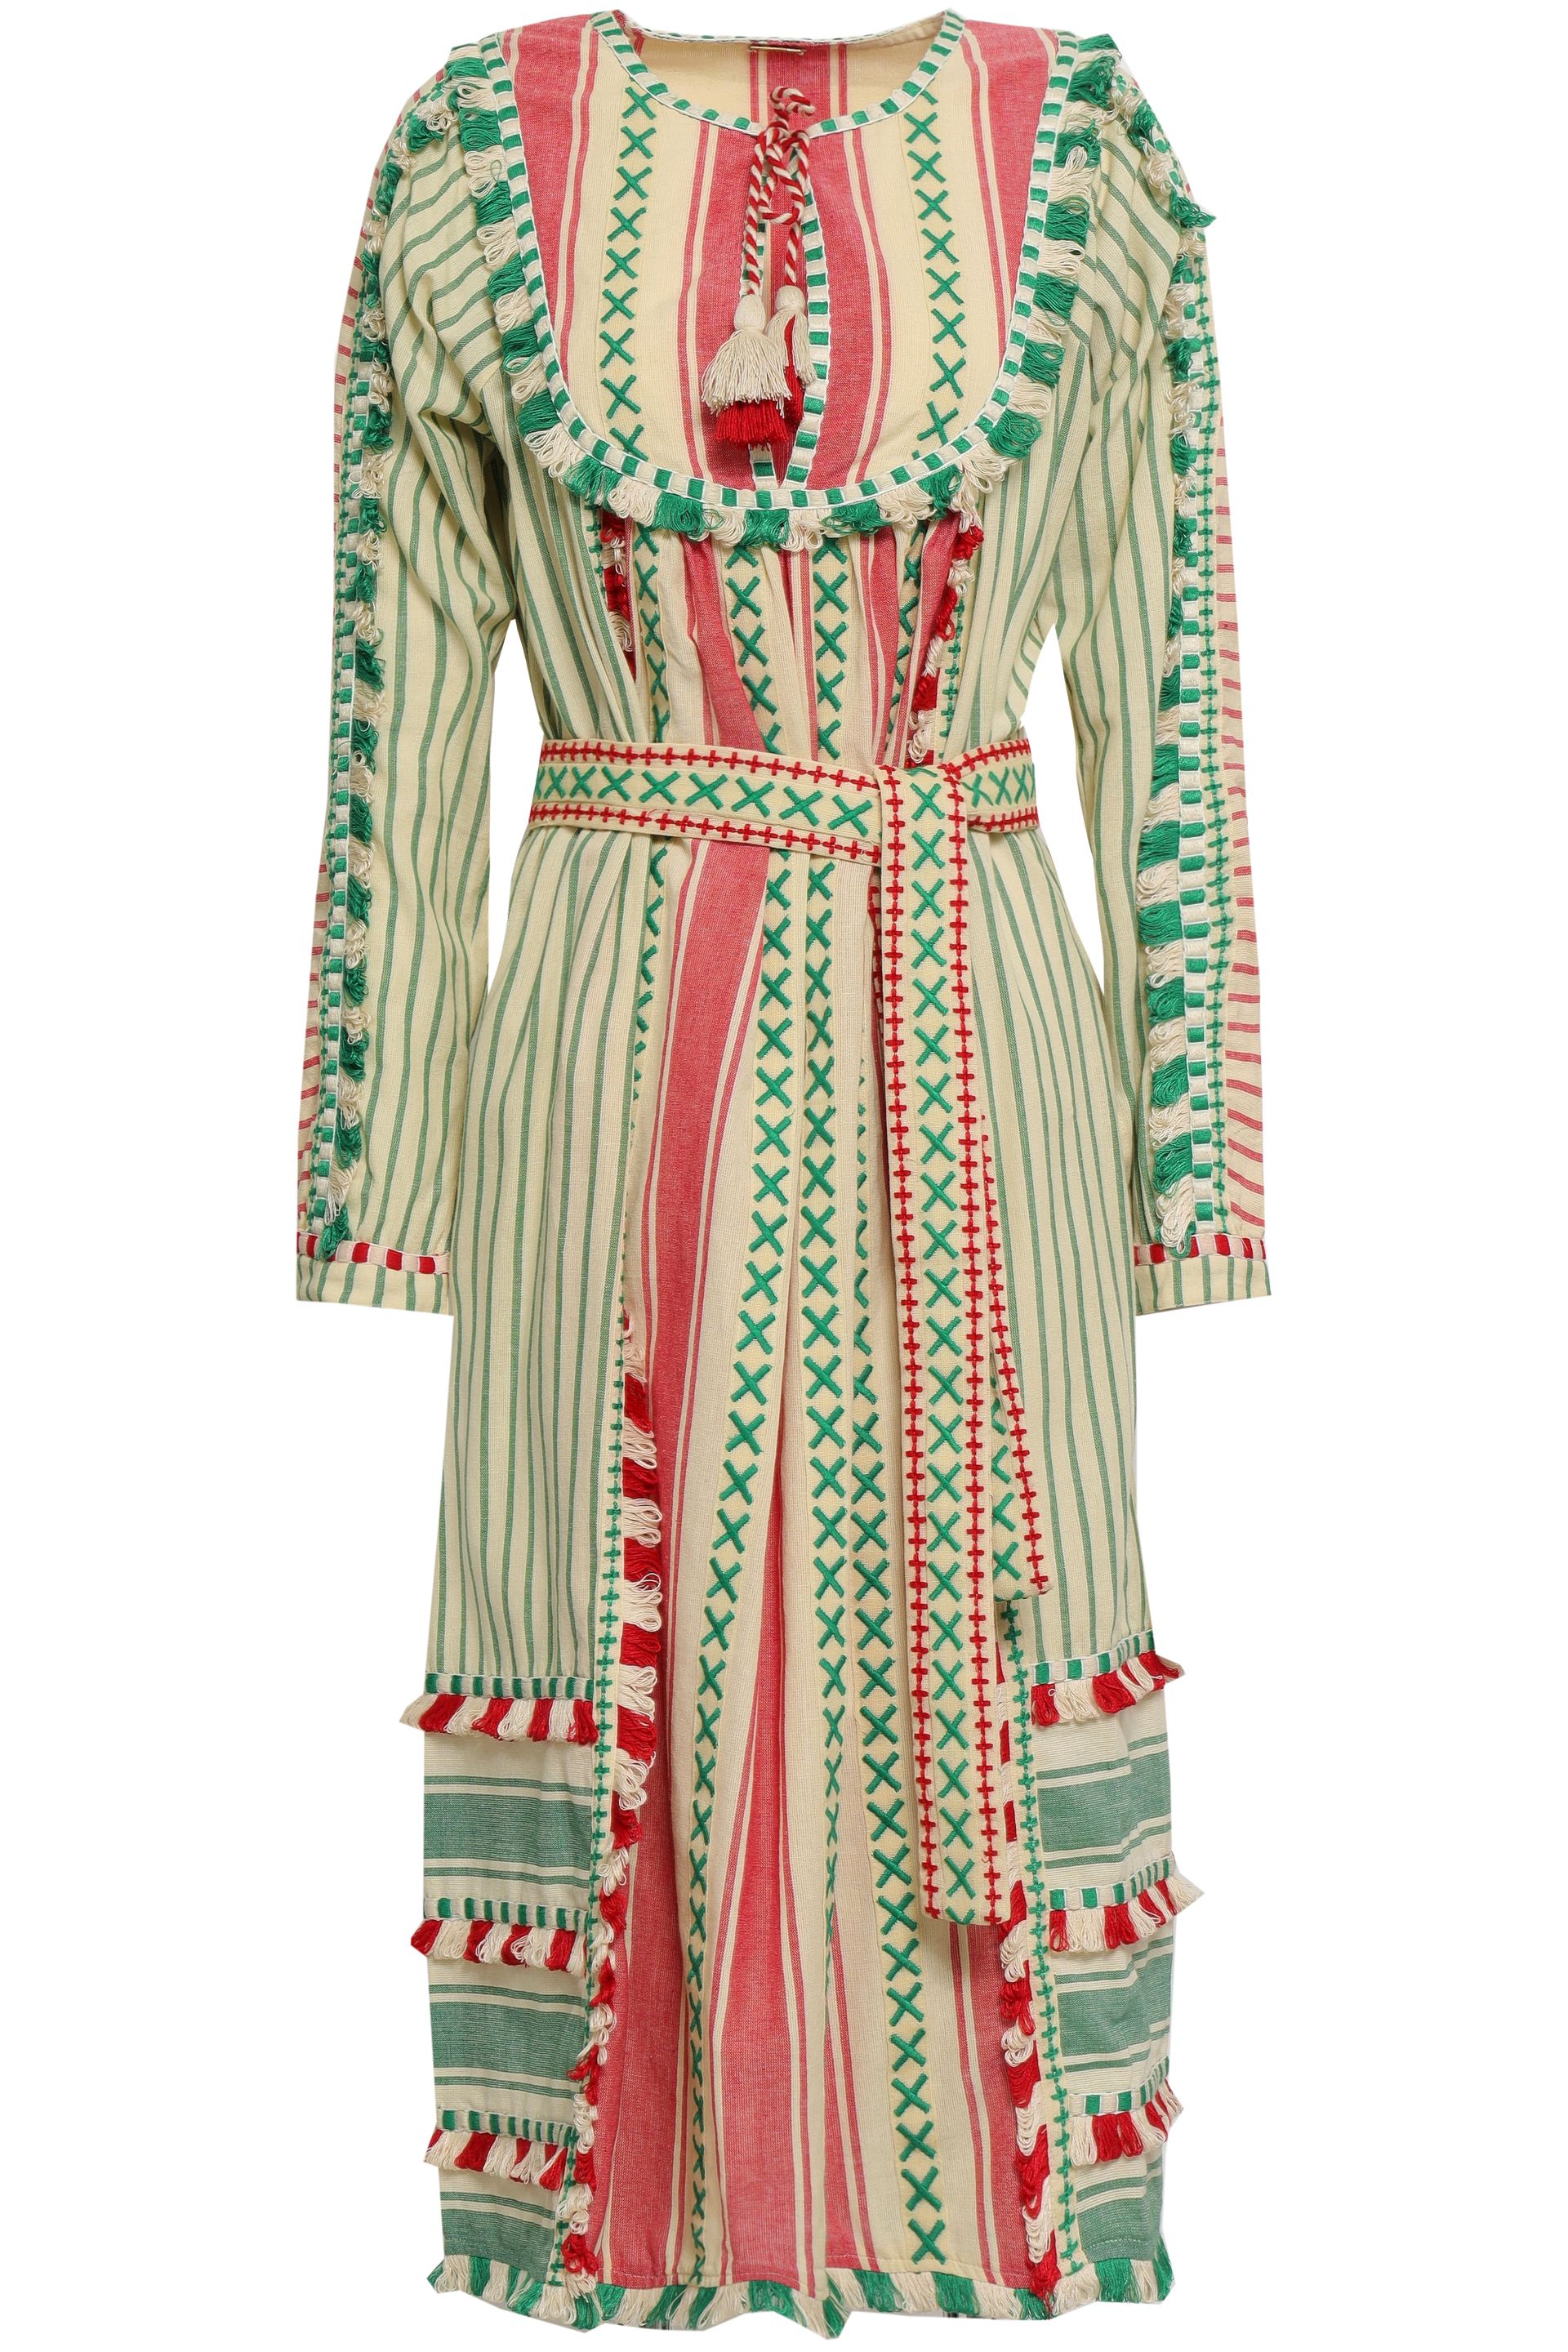 Designer Boho Dresses | Sale Up To 70% Off At THE OUTNET